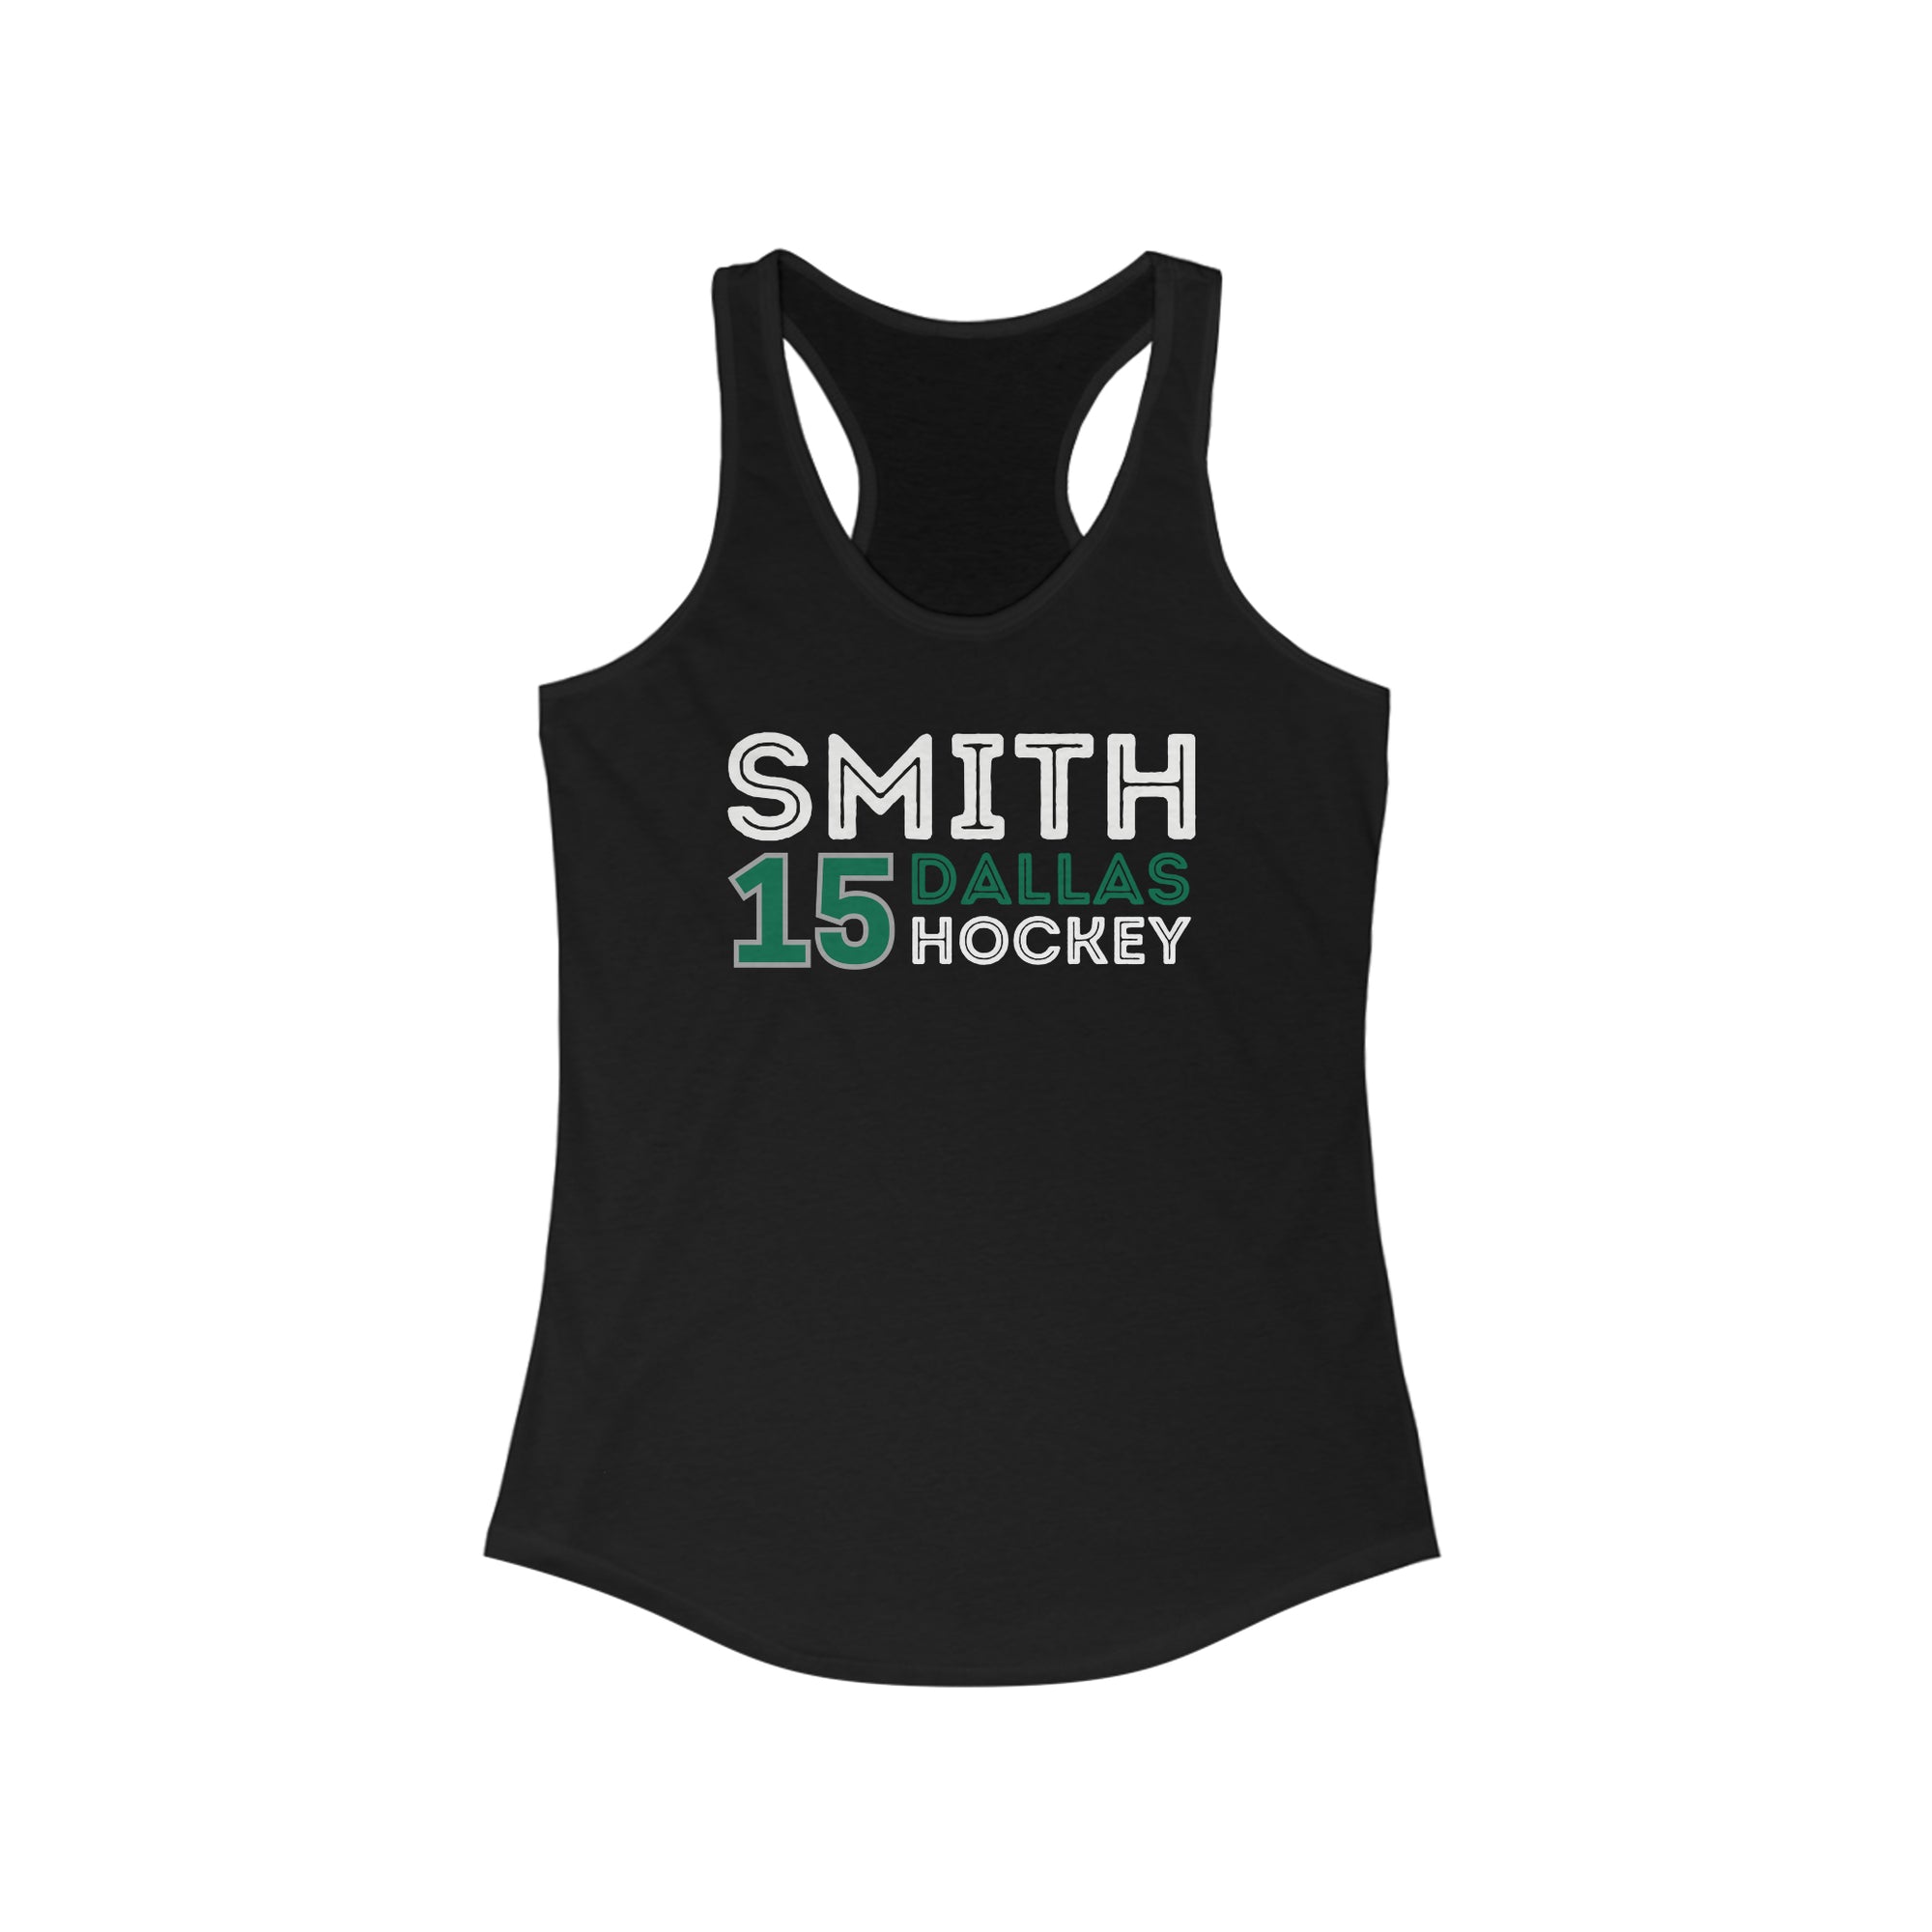 Smith 15 Dallas Hockey Grafitti Wall Design Women's Ideal Racerback Tank Top